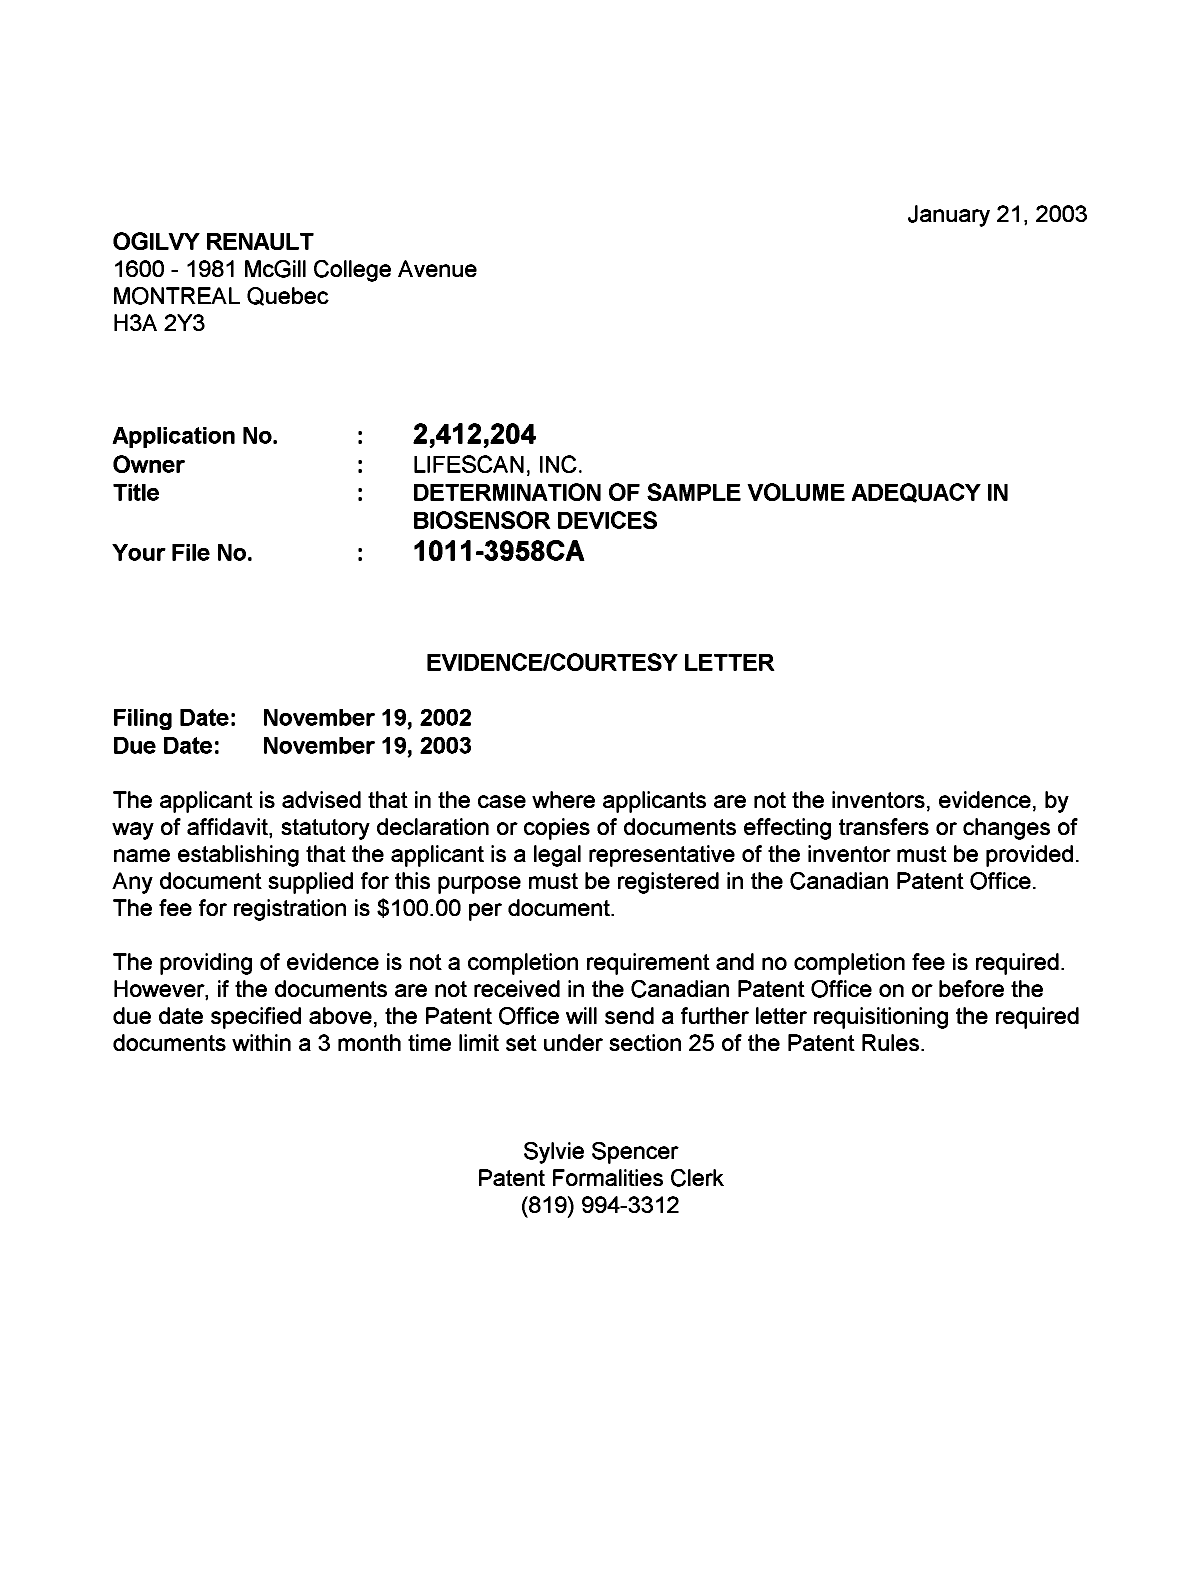 Canadian Patent Document 2412204. Correspondence 20030114. Image 1 of 1